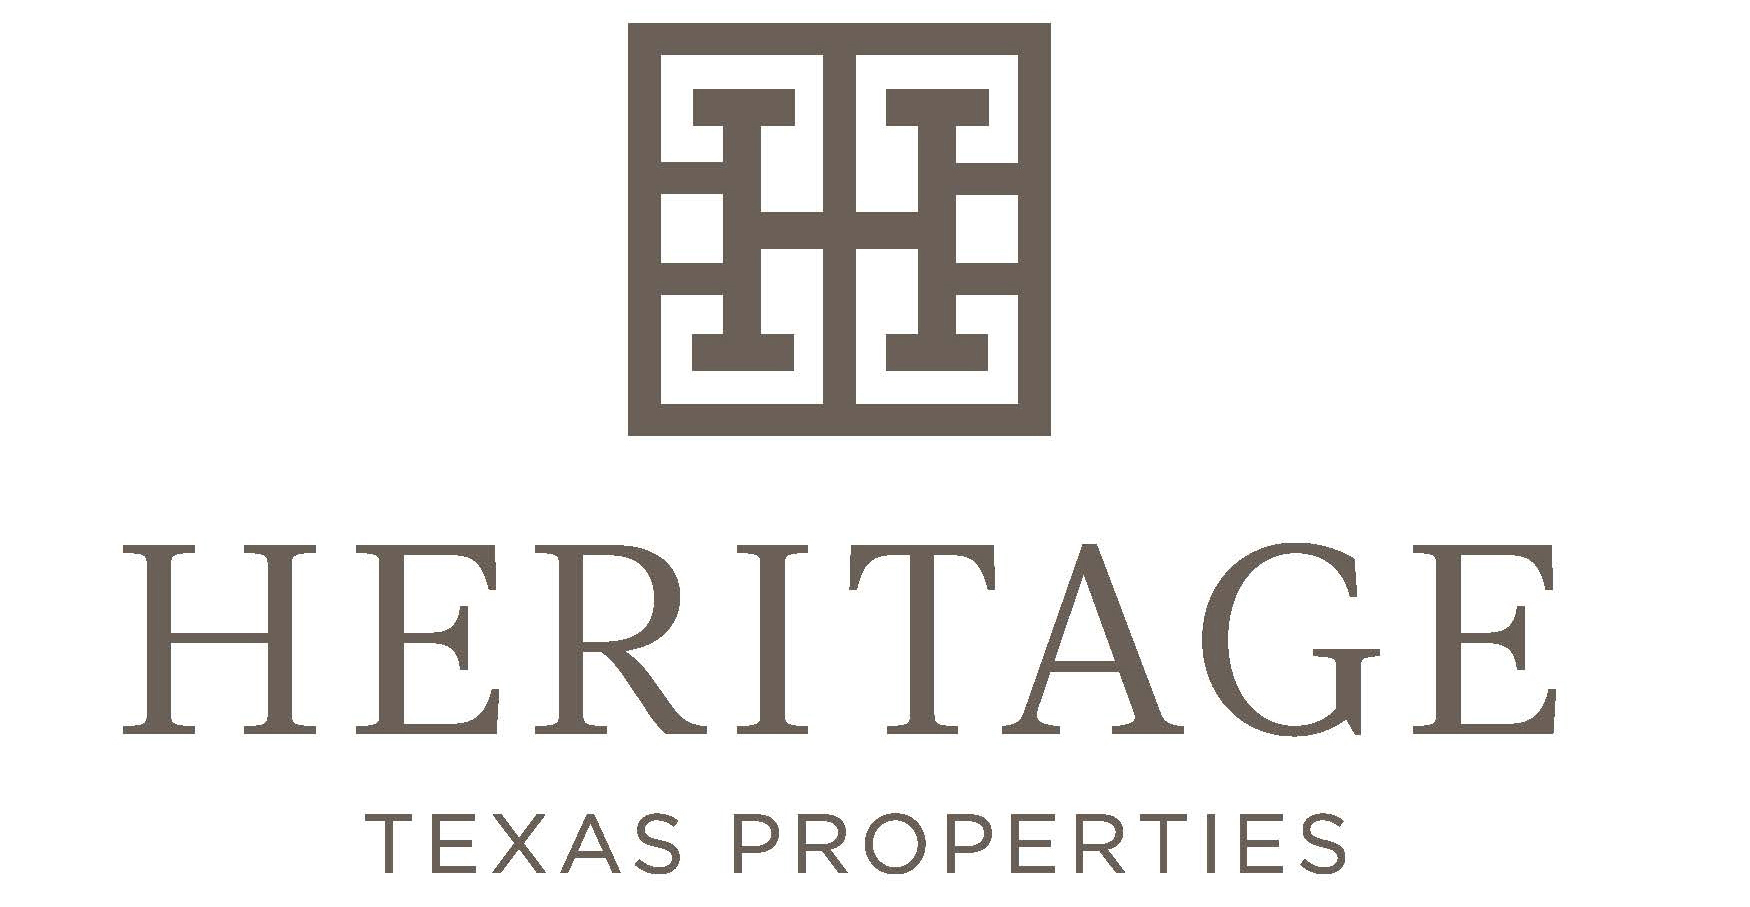 heritage texas logo.jpg